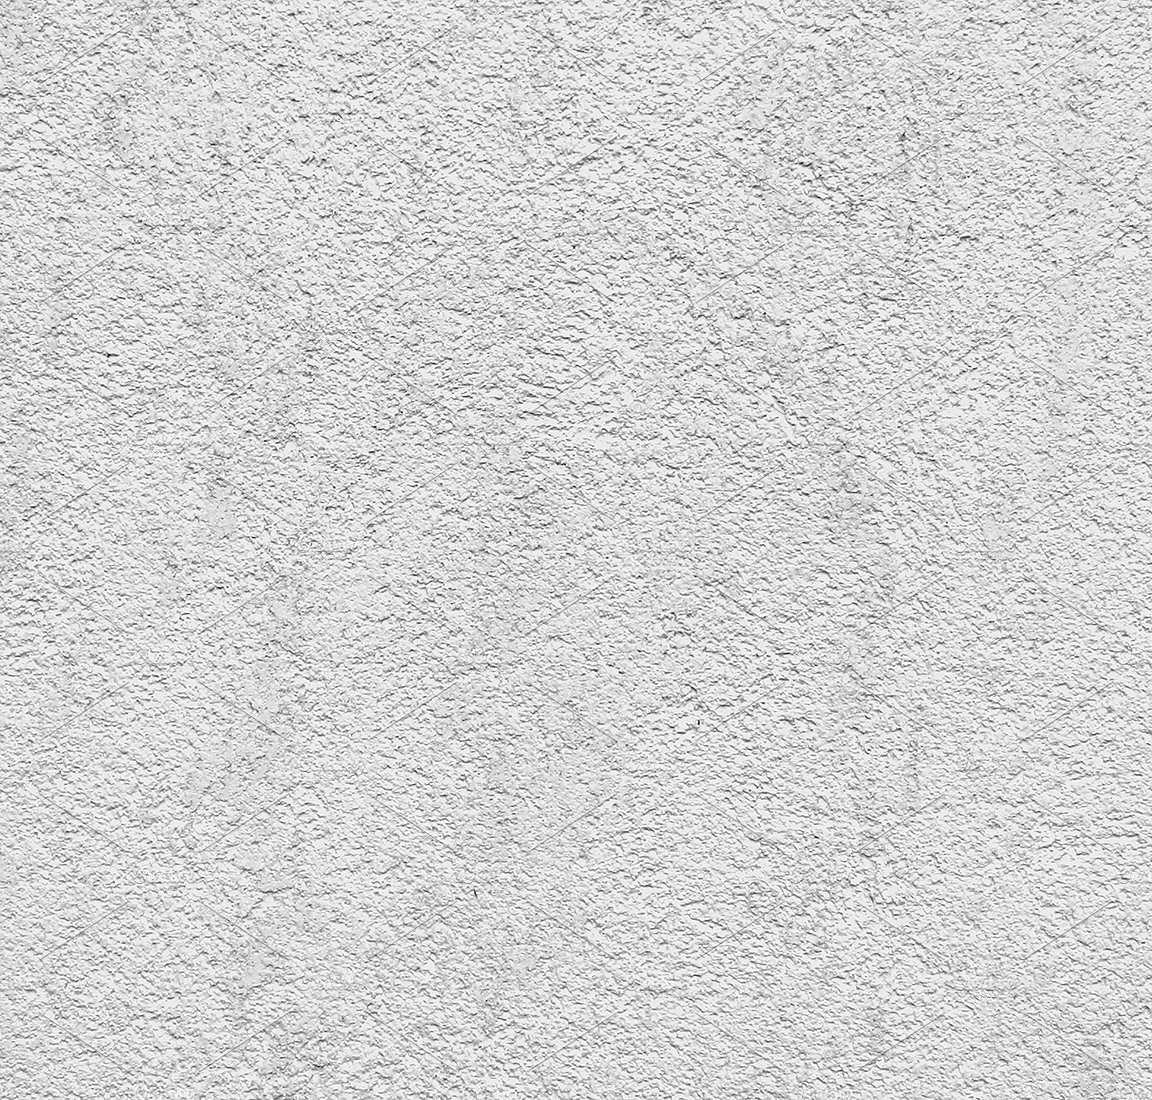 Seamless stucco wall plaster texture